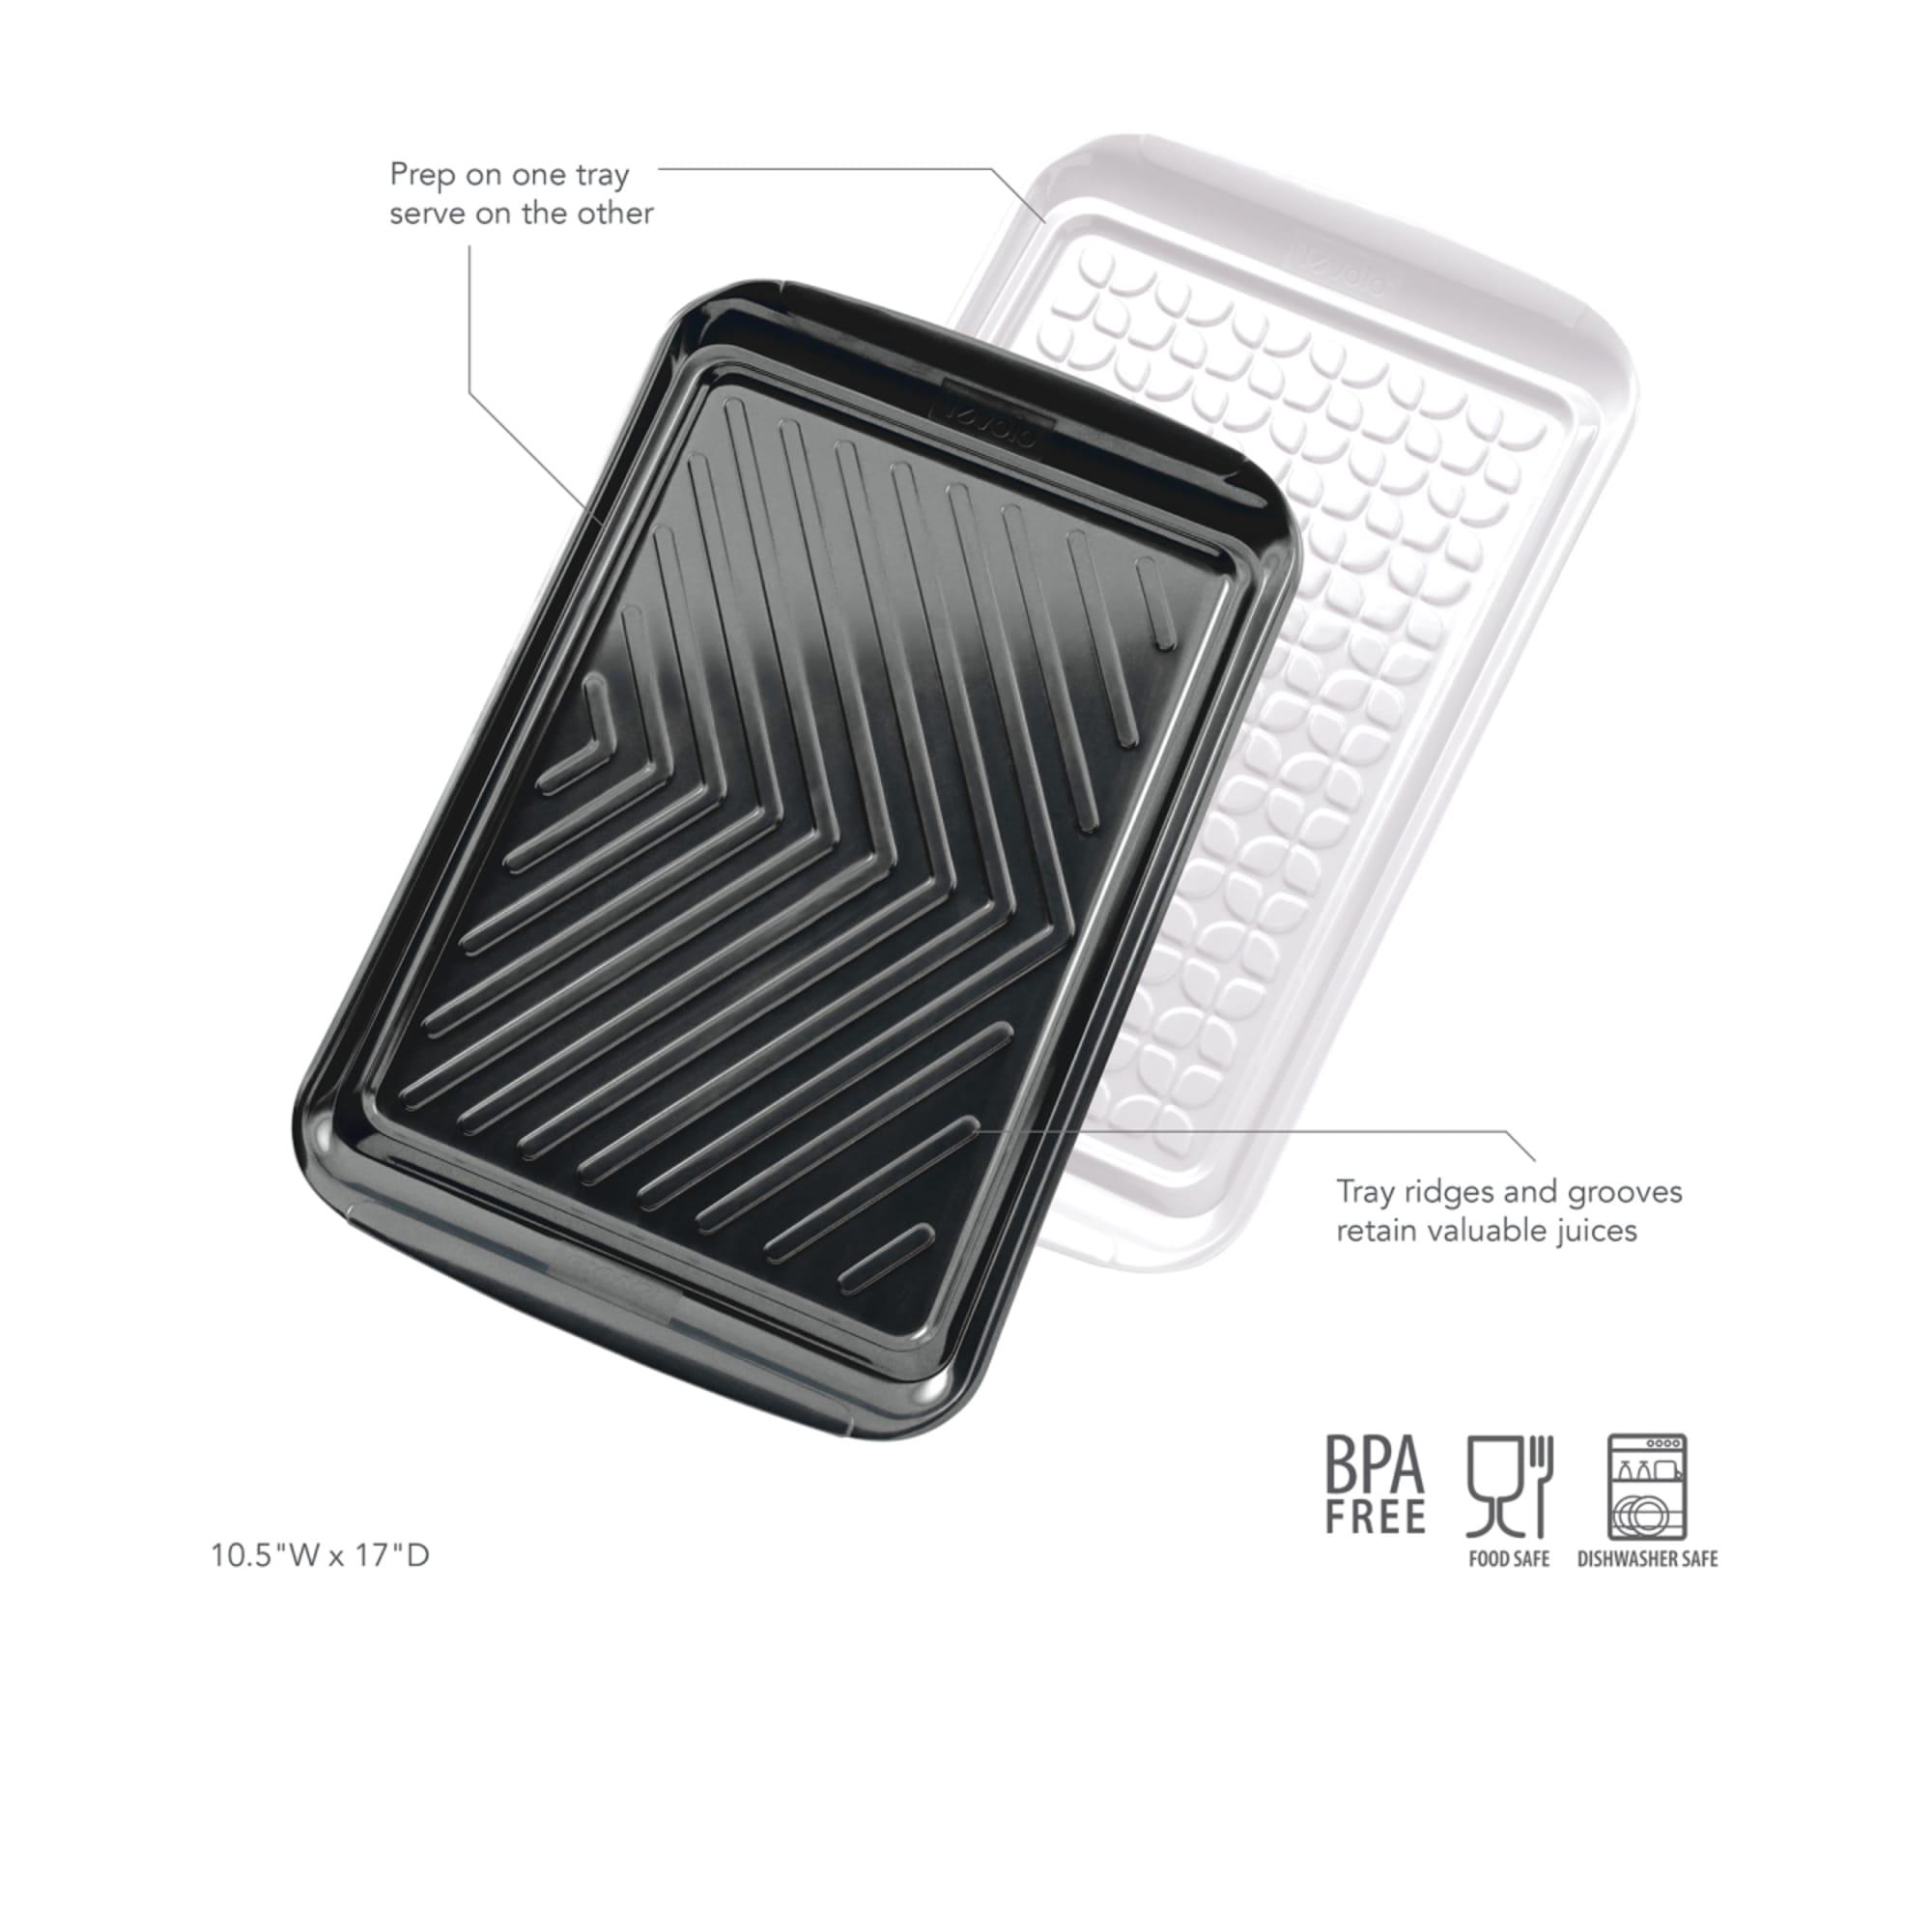 Tovolo Prep & Serve BBQ Trays Large Set of 2 Black/White Image 9